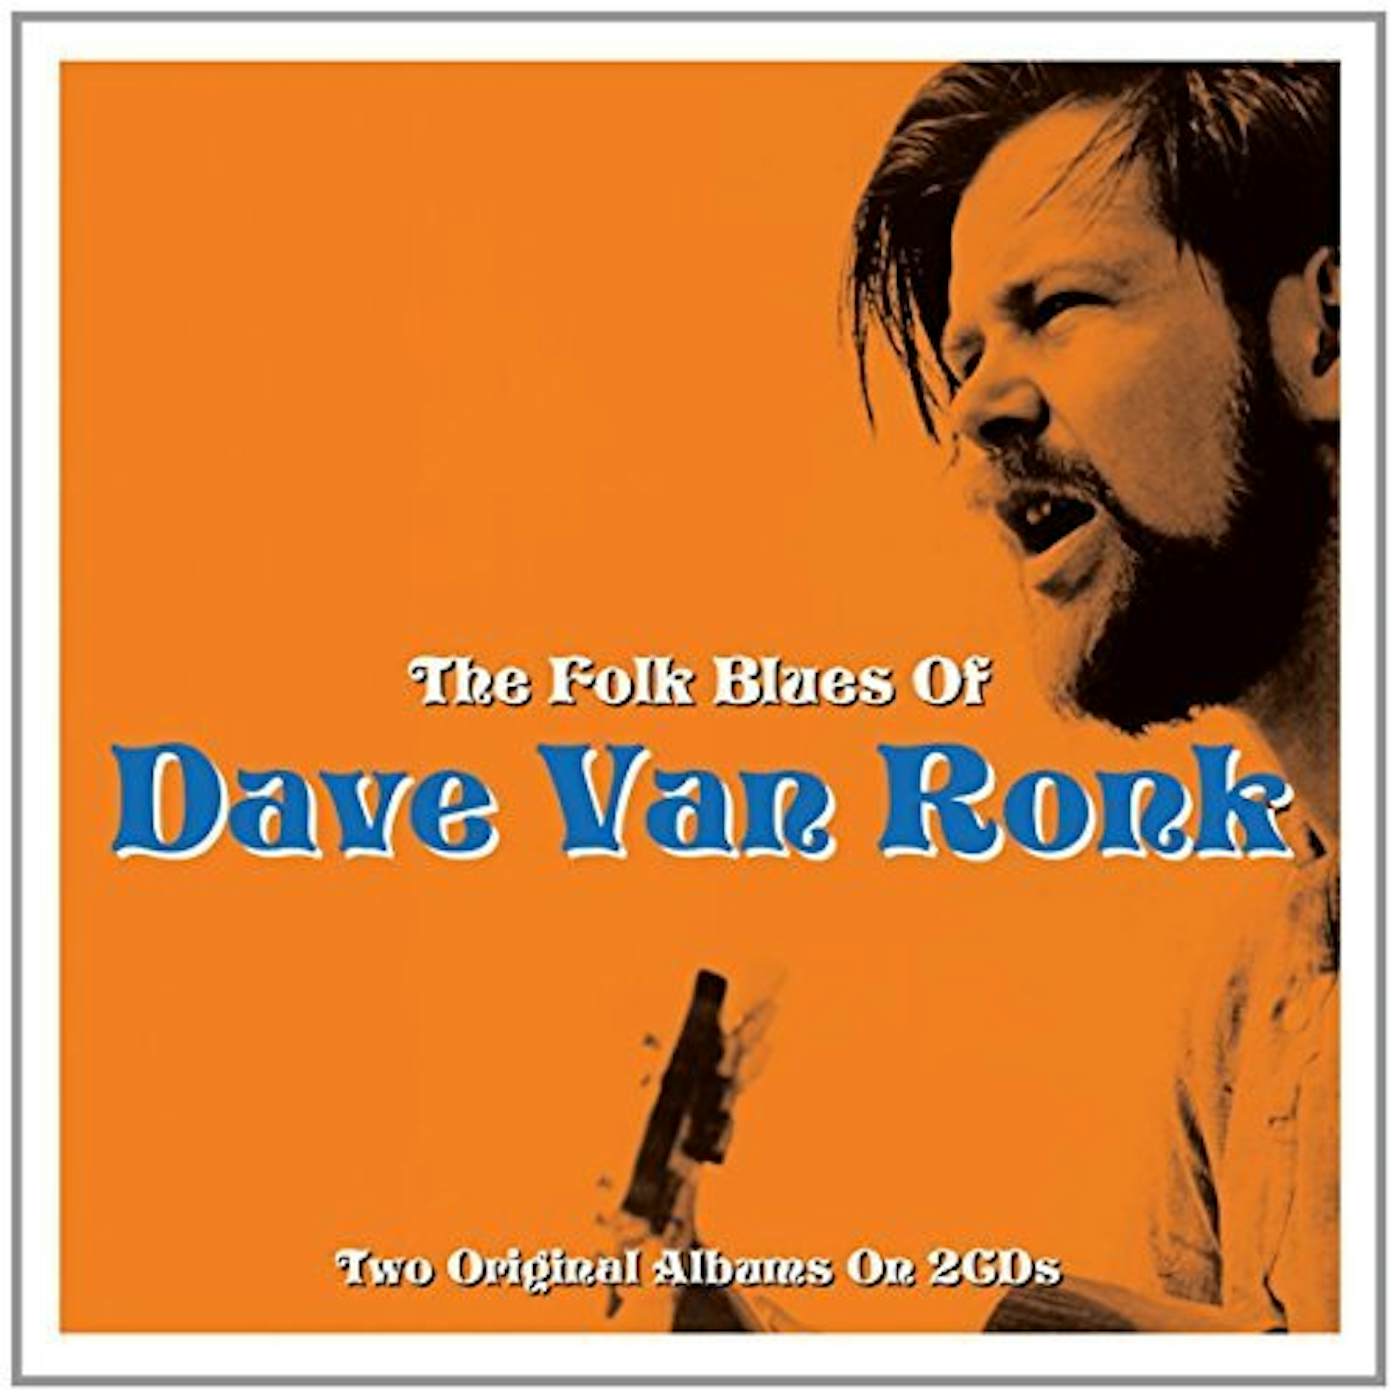 Dave Van Ronk FOLK BLUES OF CD